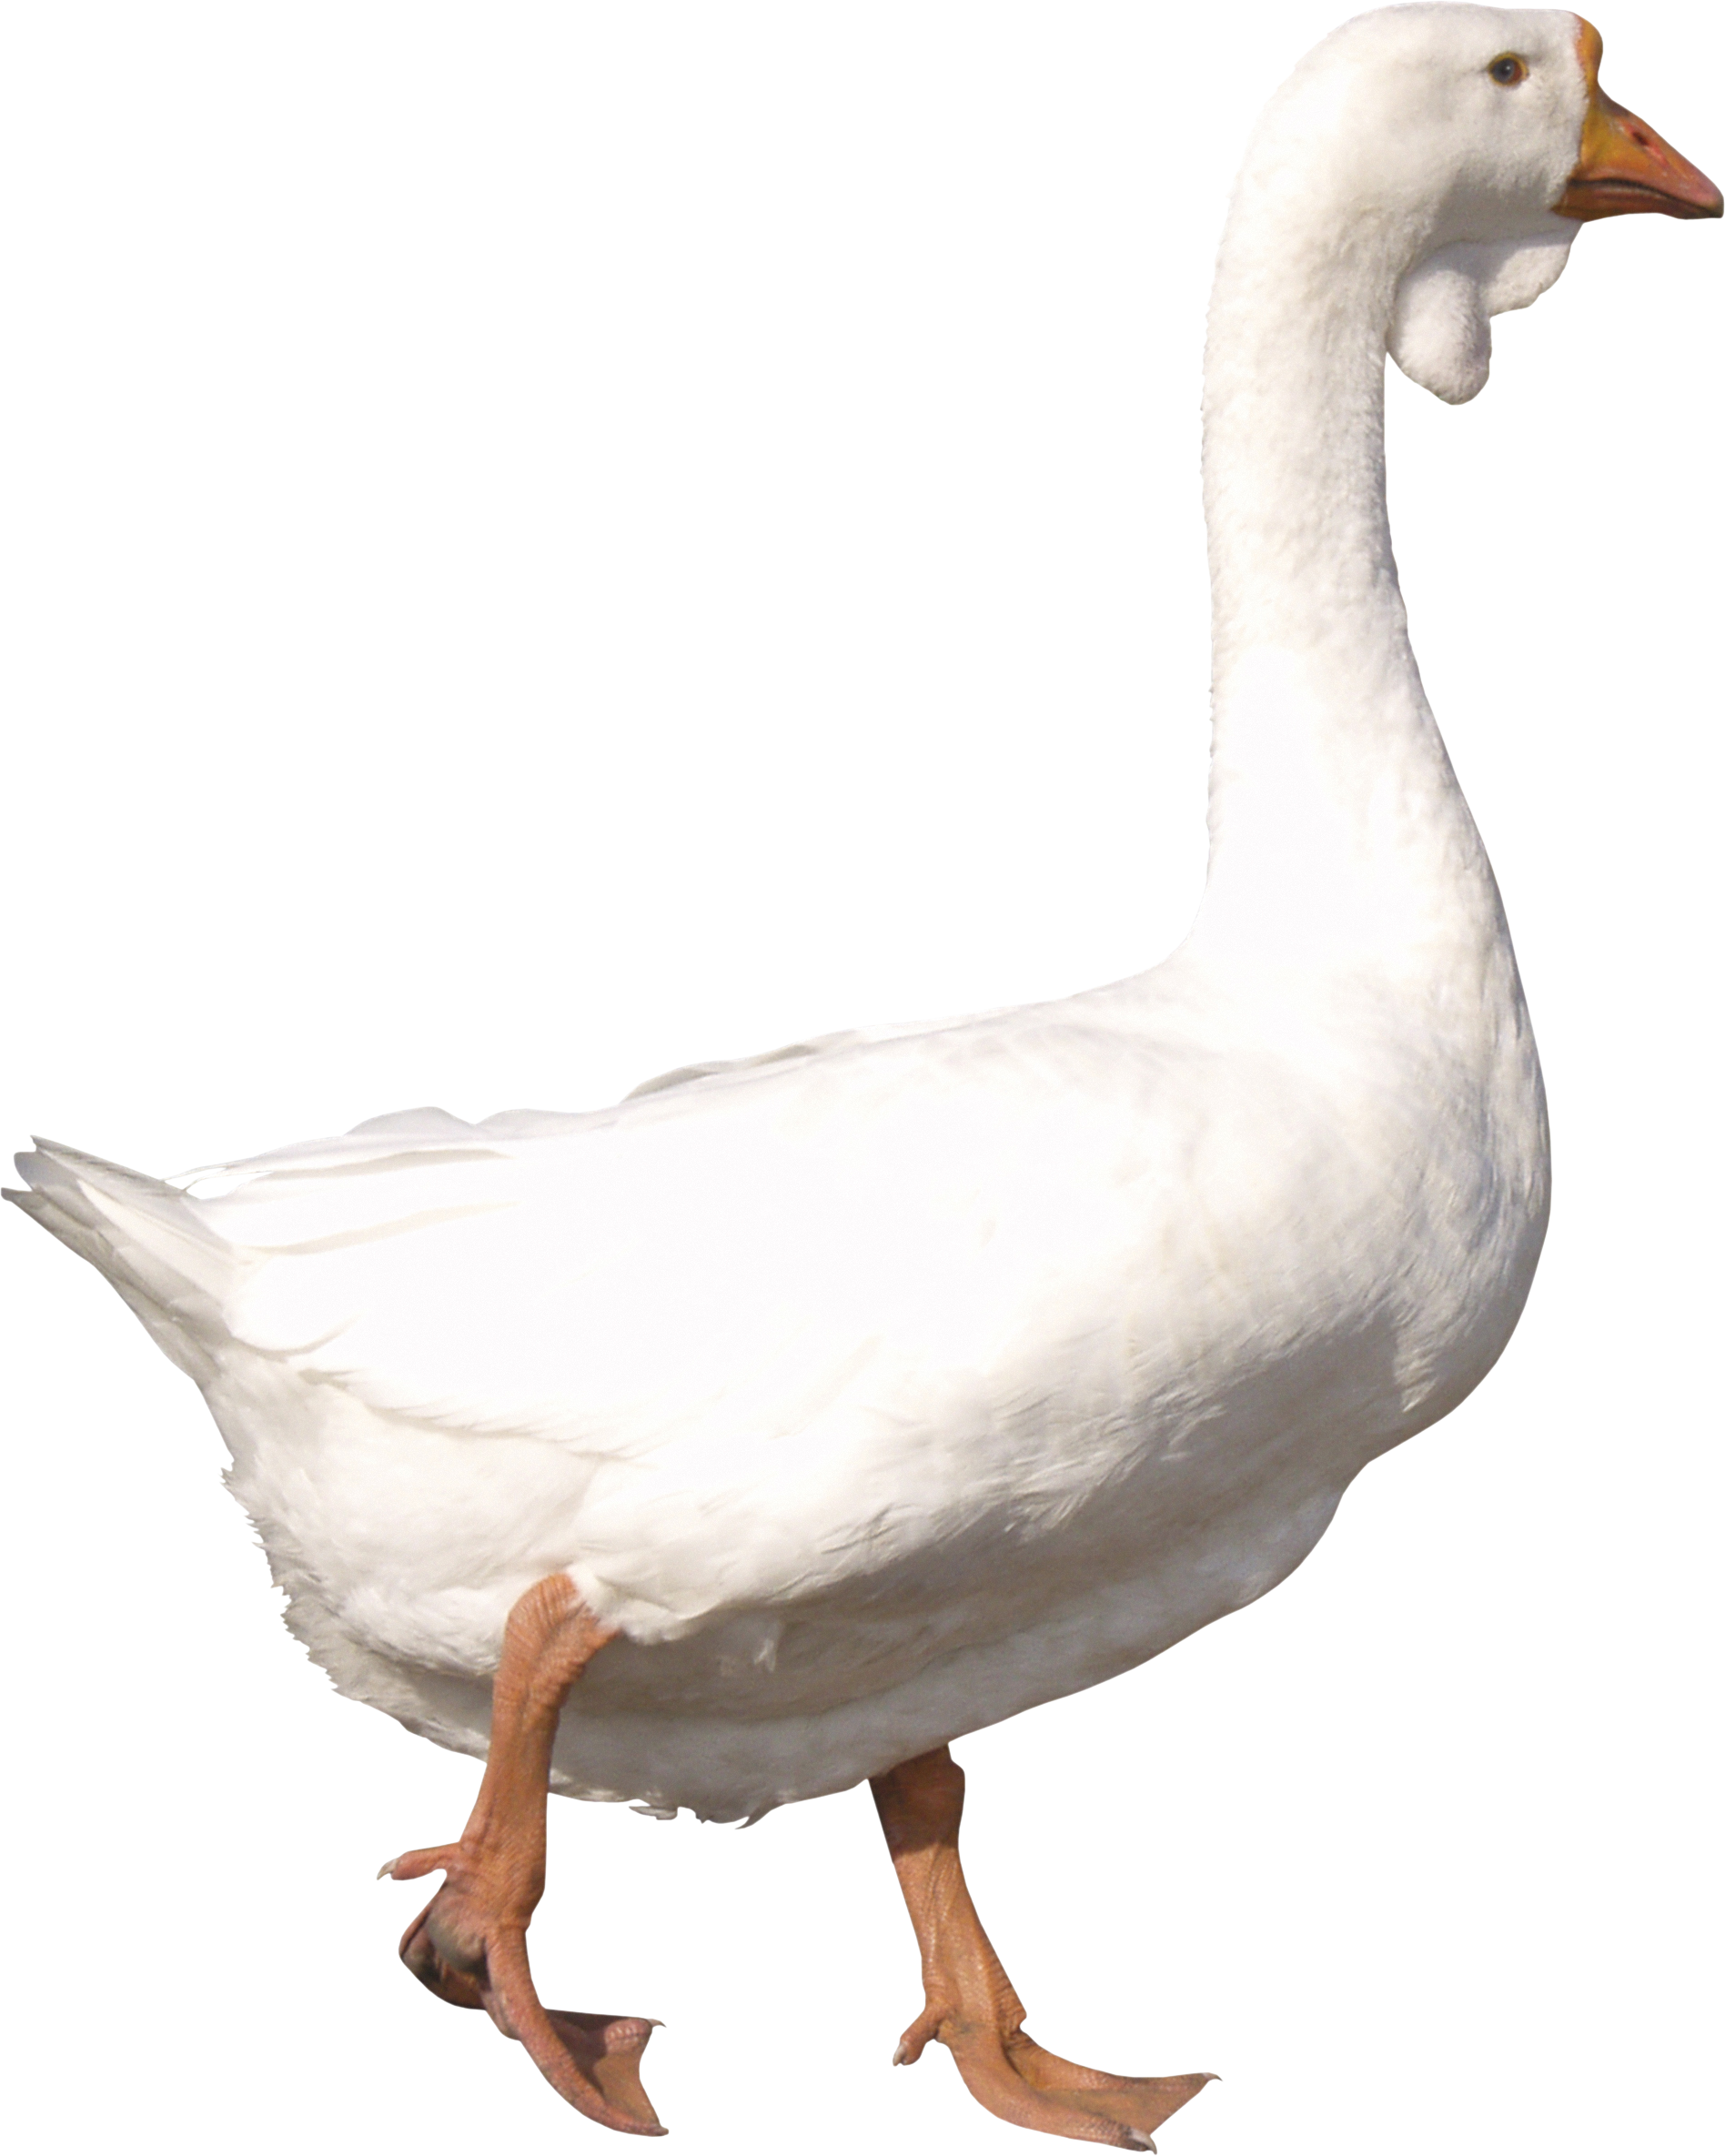 duckling clipart swan